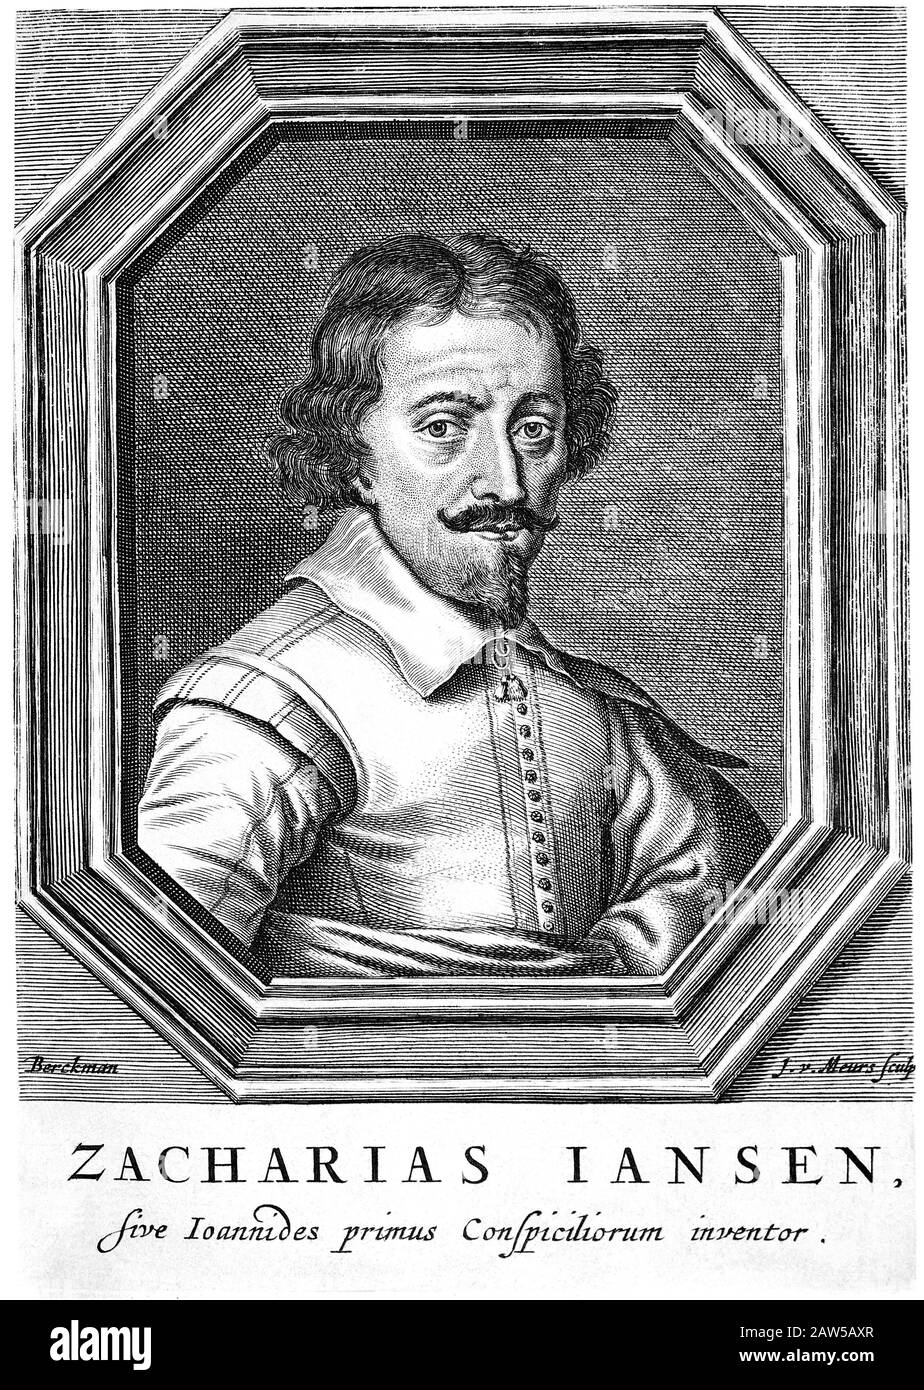 1590 , Middelburg , OLANDA : l'oratrice olandese , inventore del microscopio  ottico e telescopio ZACHARIAS ZANSZ aka JANSEN aka Sacharias Jan Foto stock  - Alamy